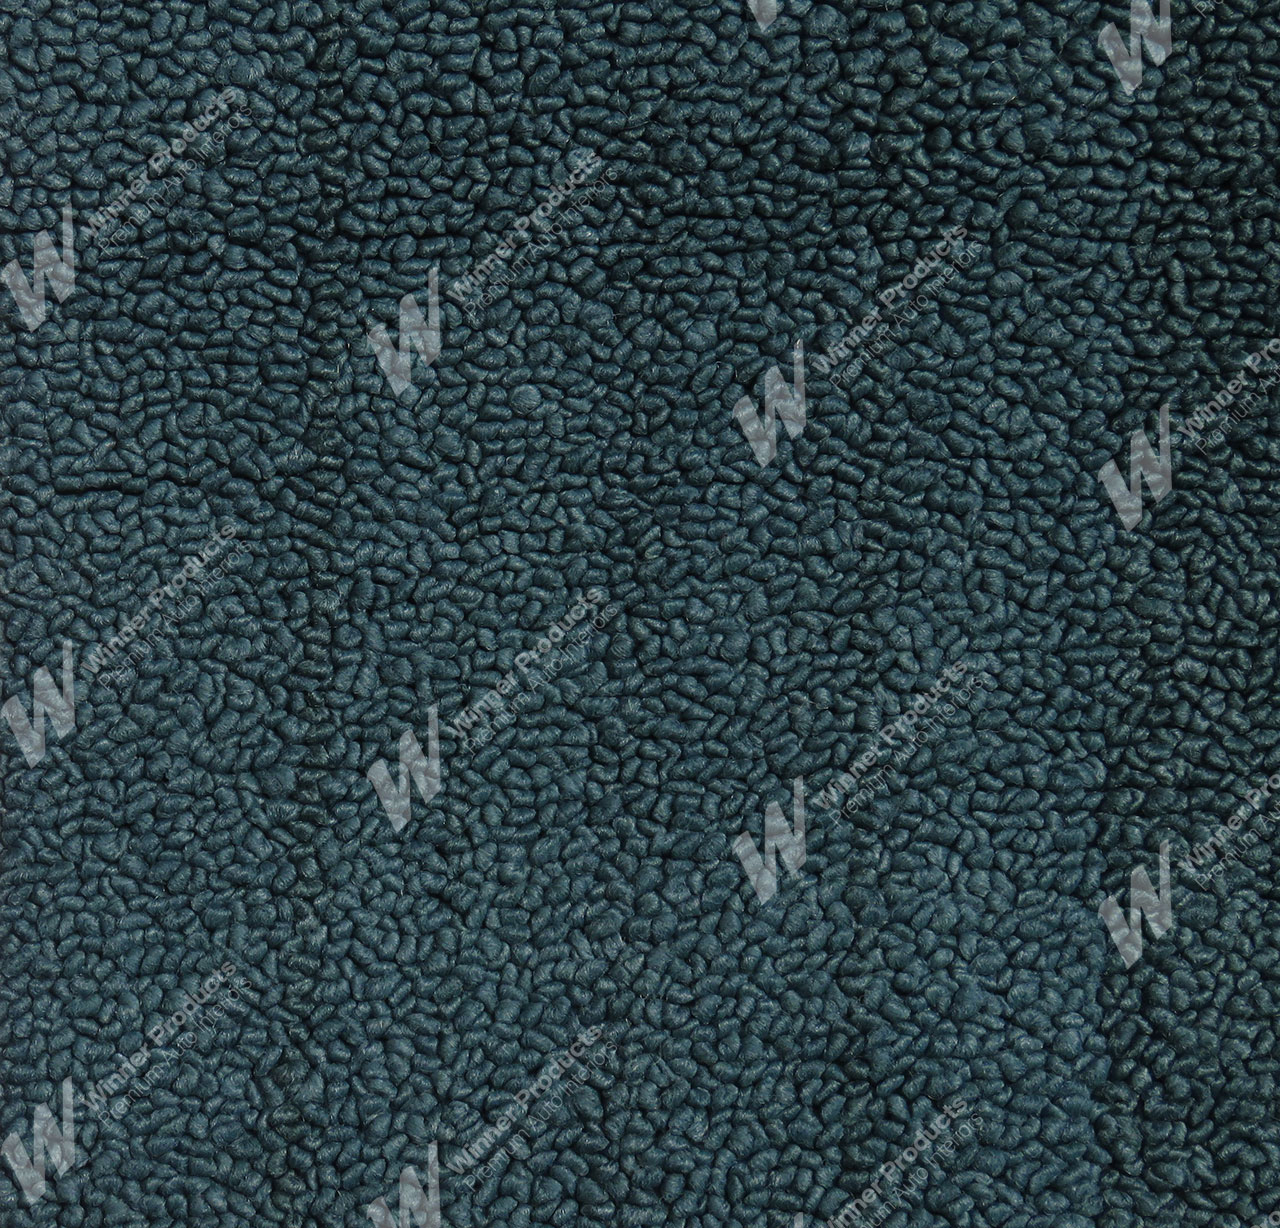 Holden Premier HT Premier Wagon 13T Turquoise Mist & Castillion Weave Carpet (Image 1 of 1)